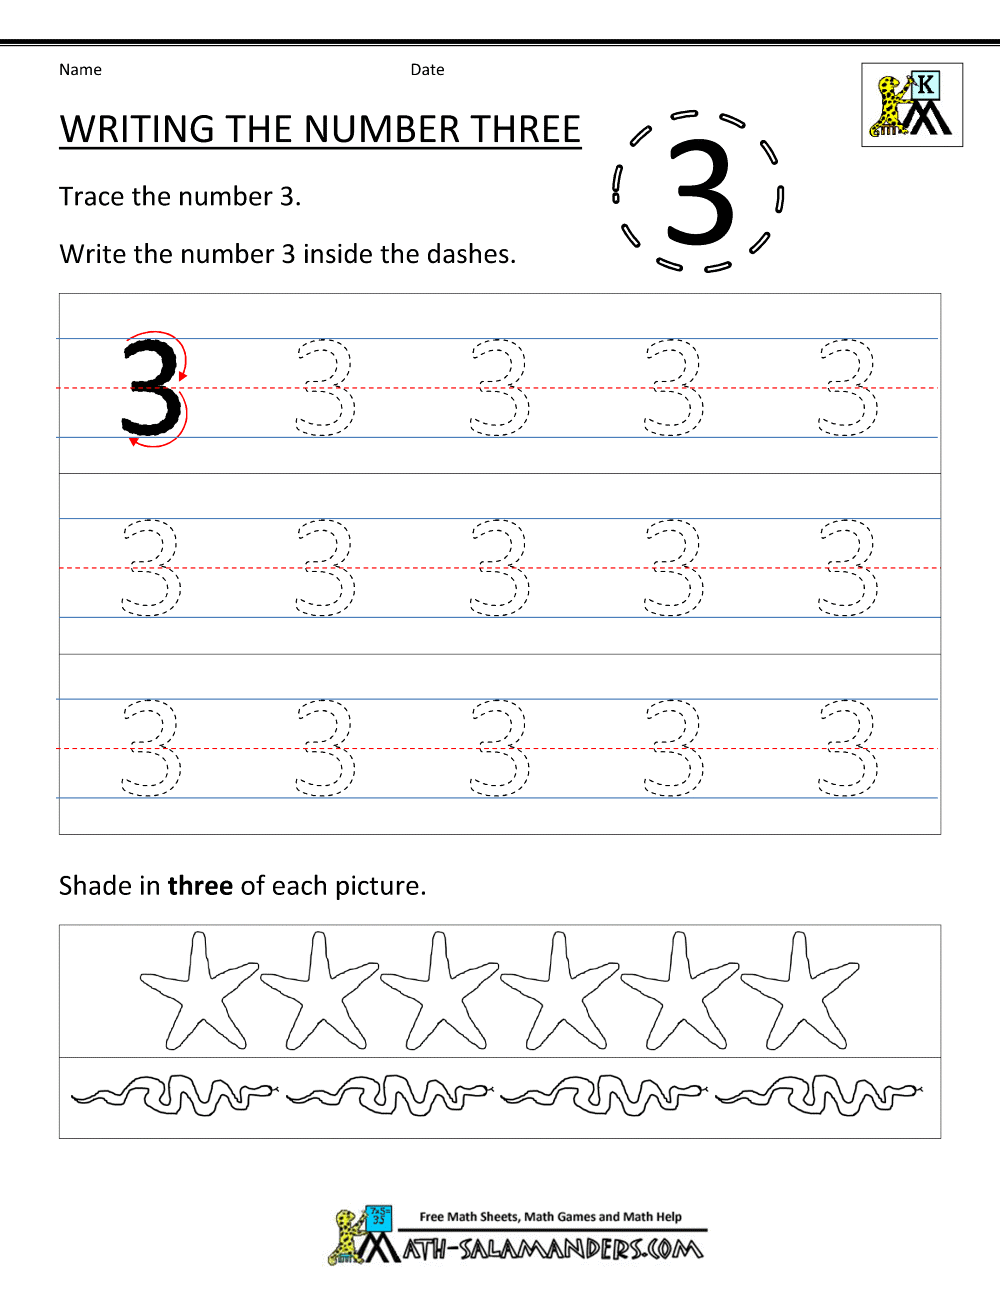 kindergarten-math-printable-writing-number-3